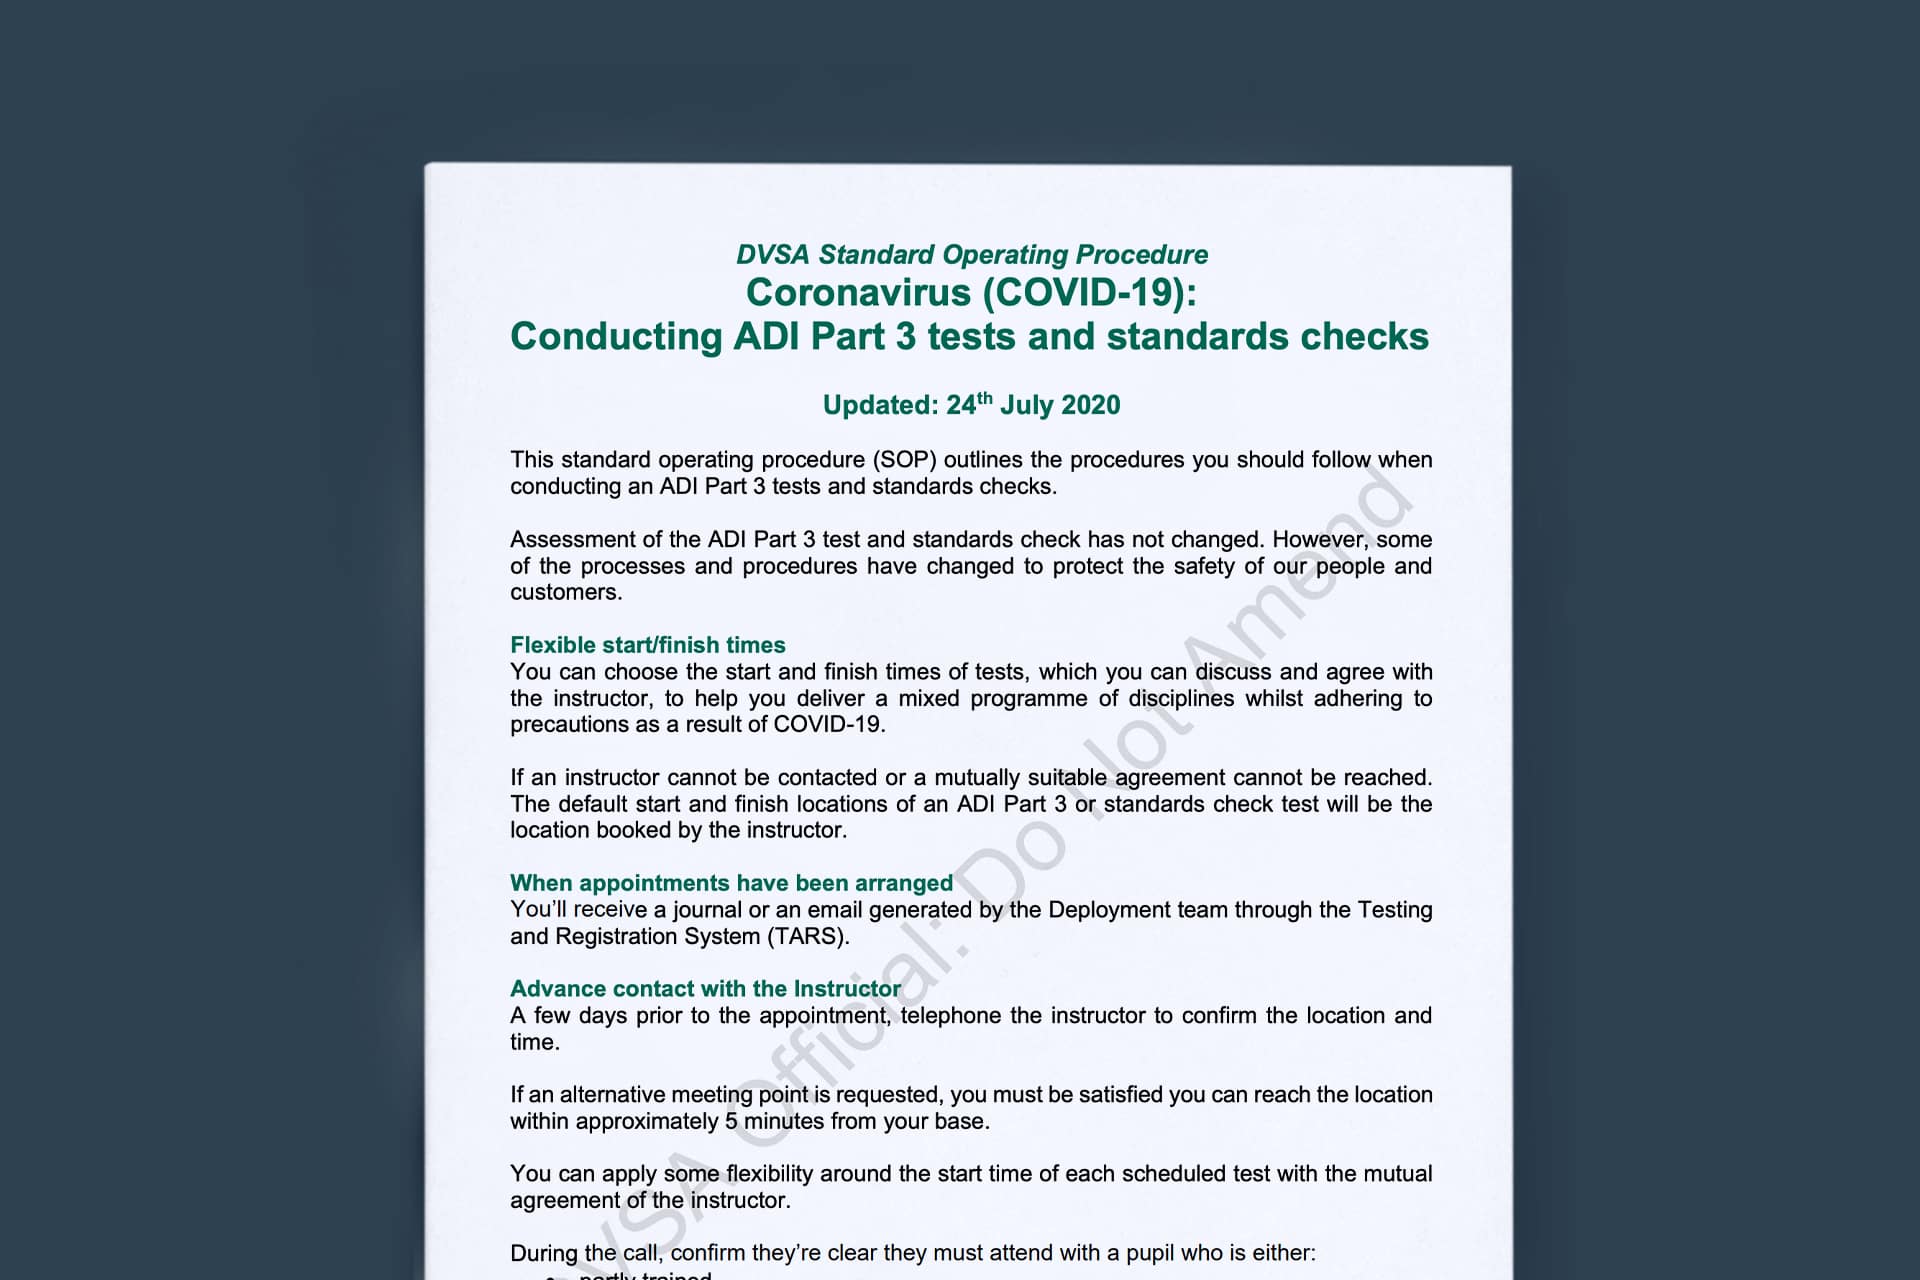 COVID-19 DVSA Standard Operating Procedure For Part 3 Tests & Standard Checks